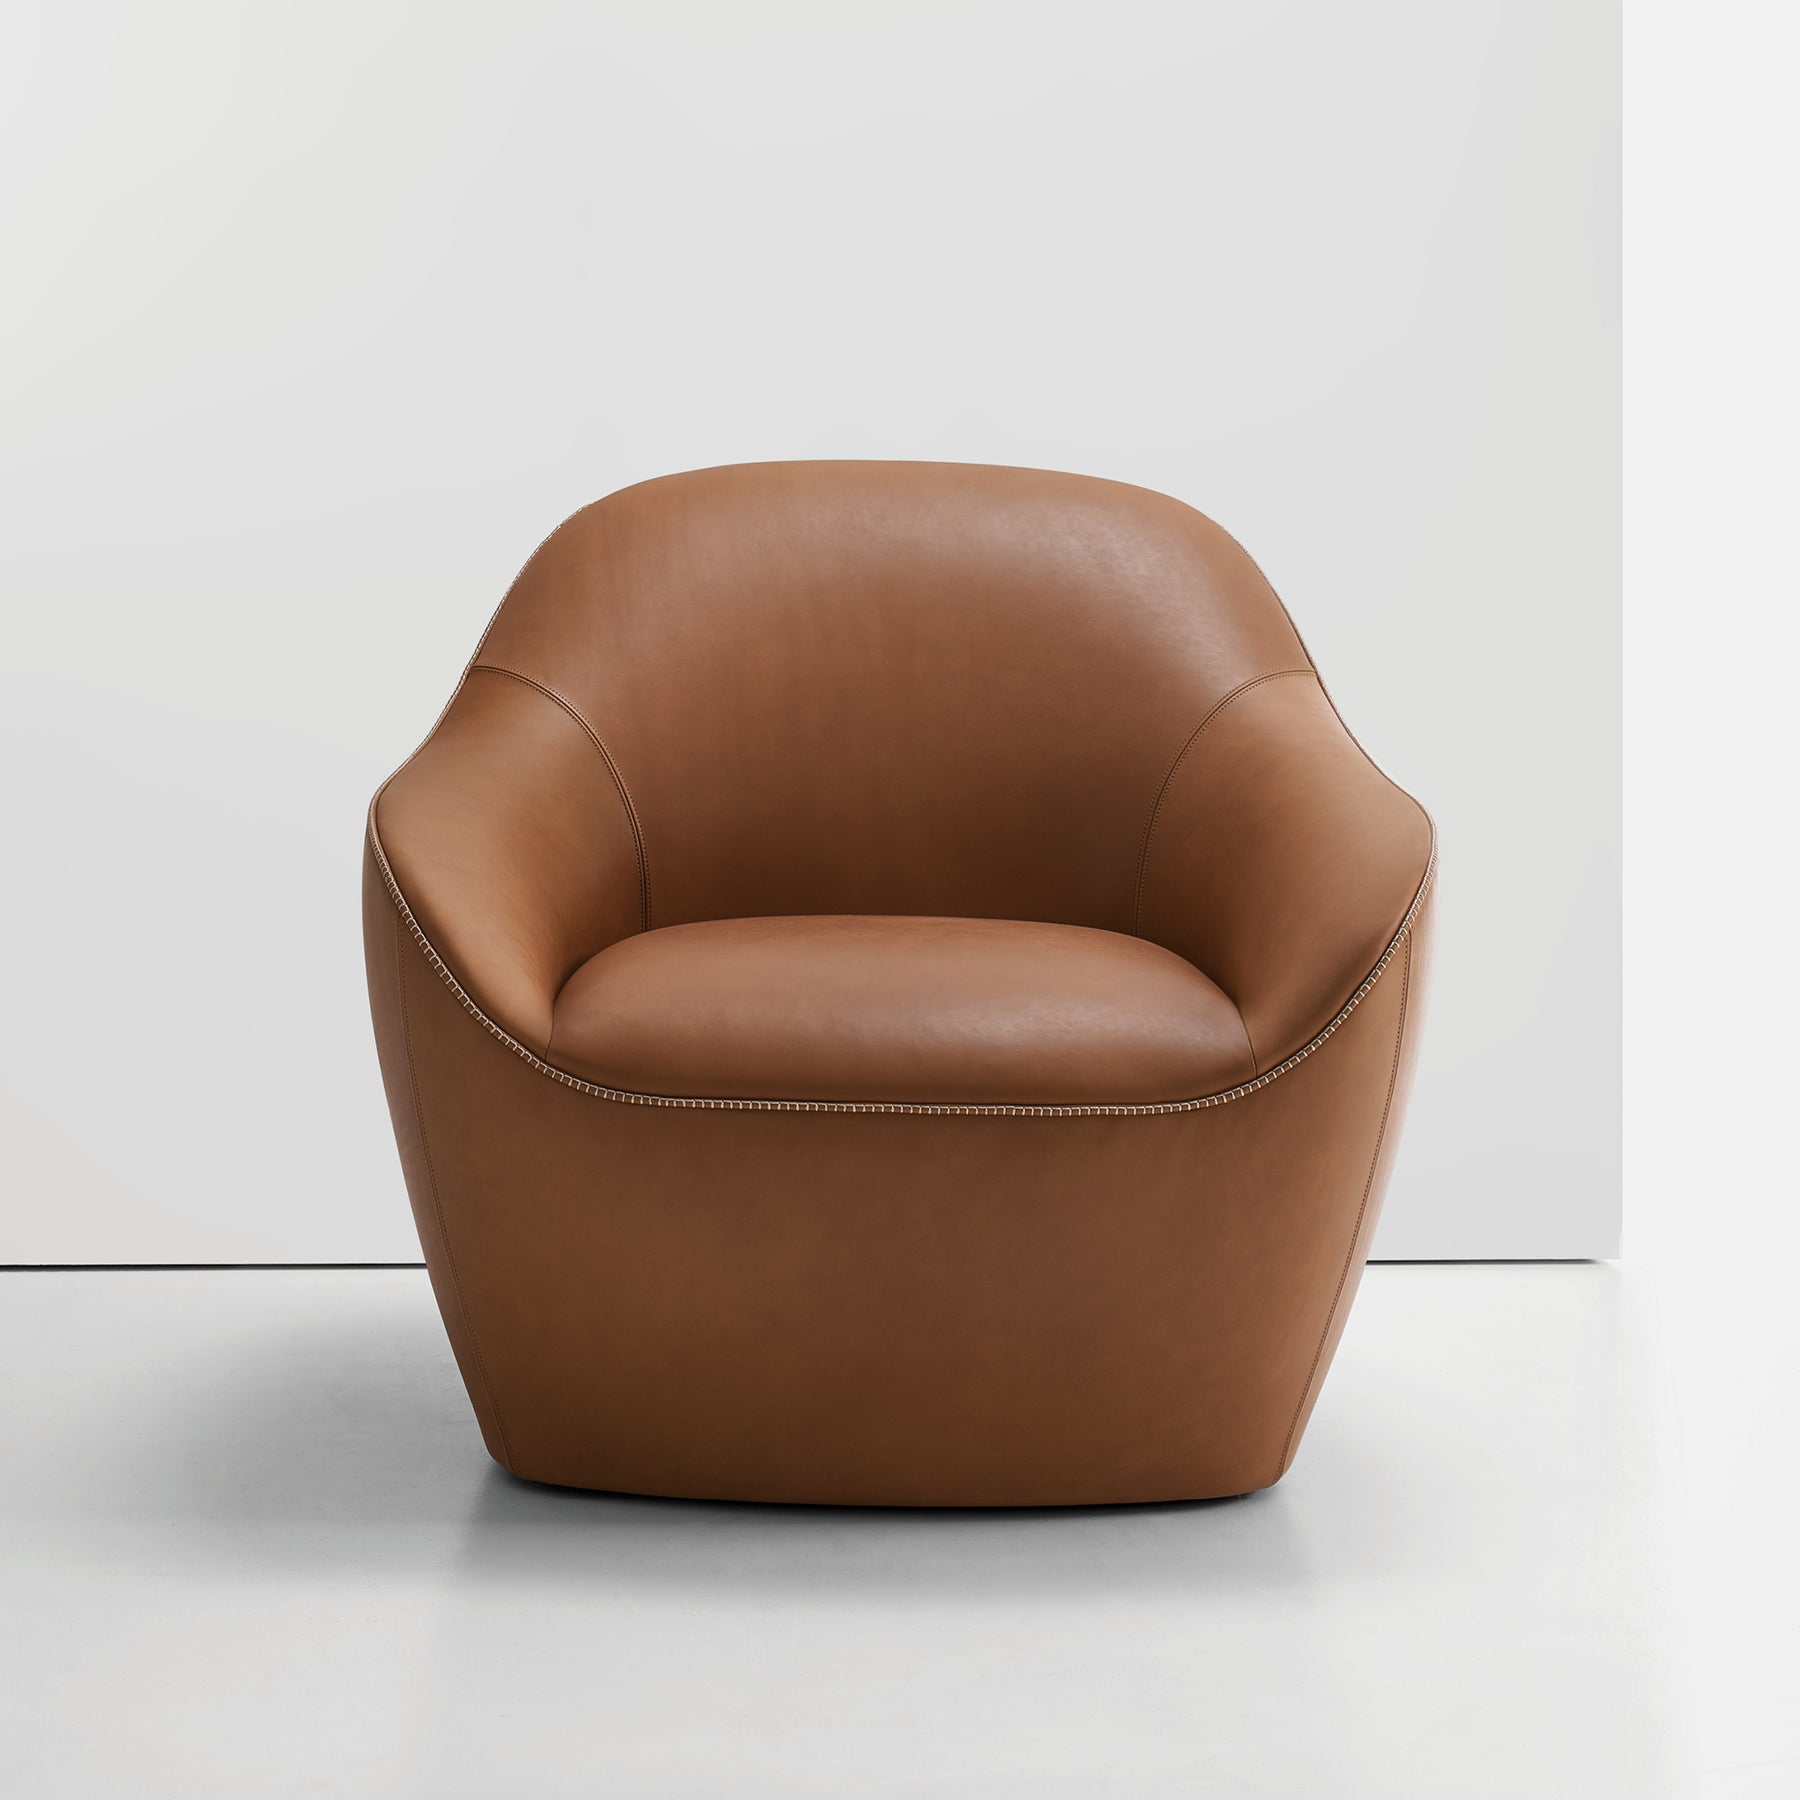 Bernhardt Design Terry Crews Becca Chair Camel Leather Front